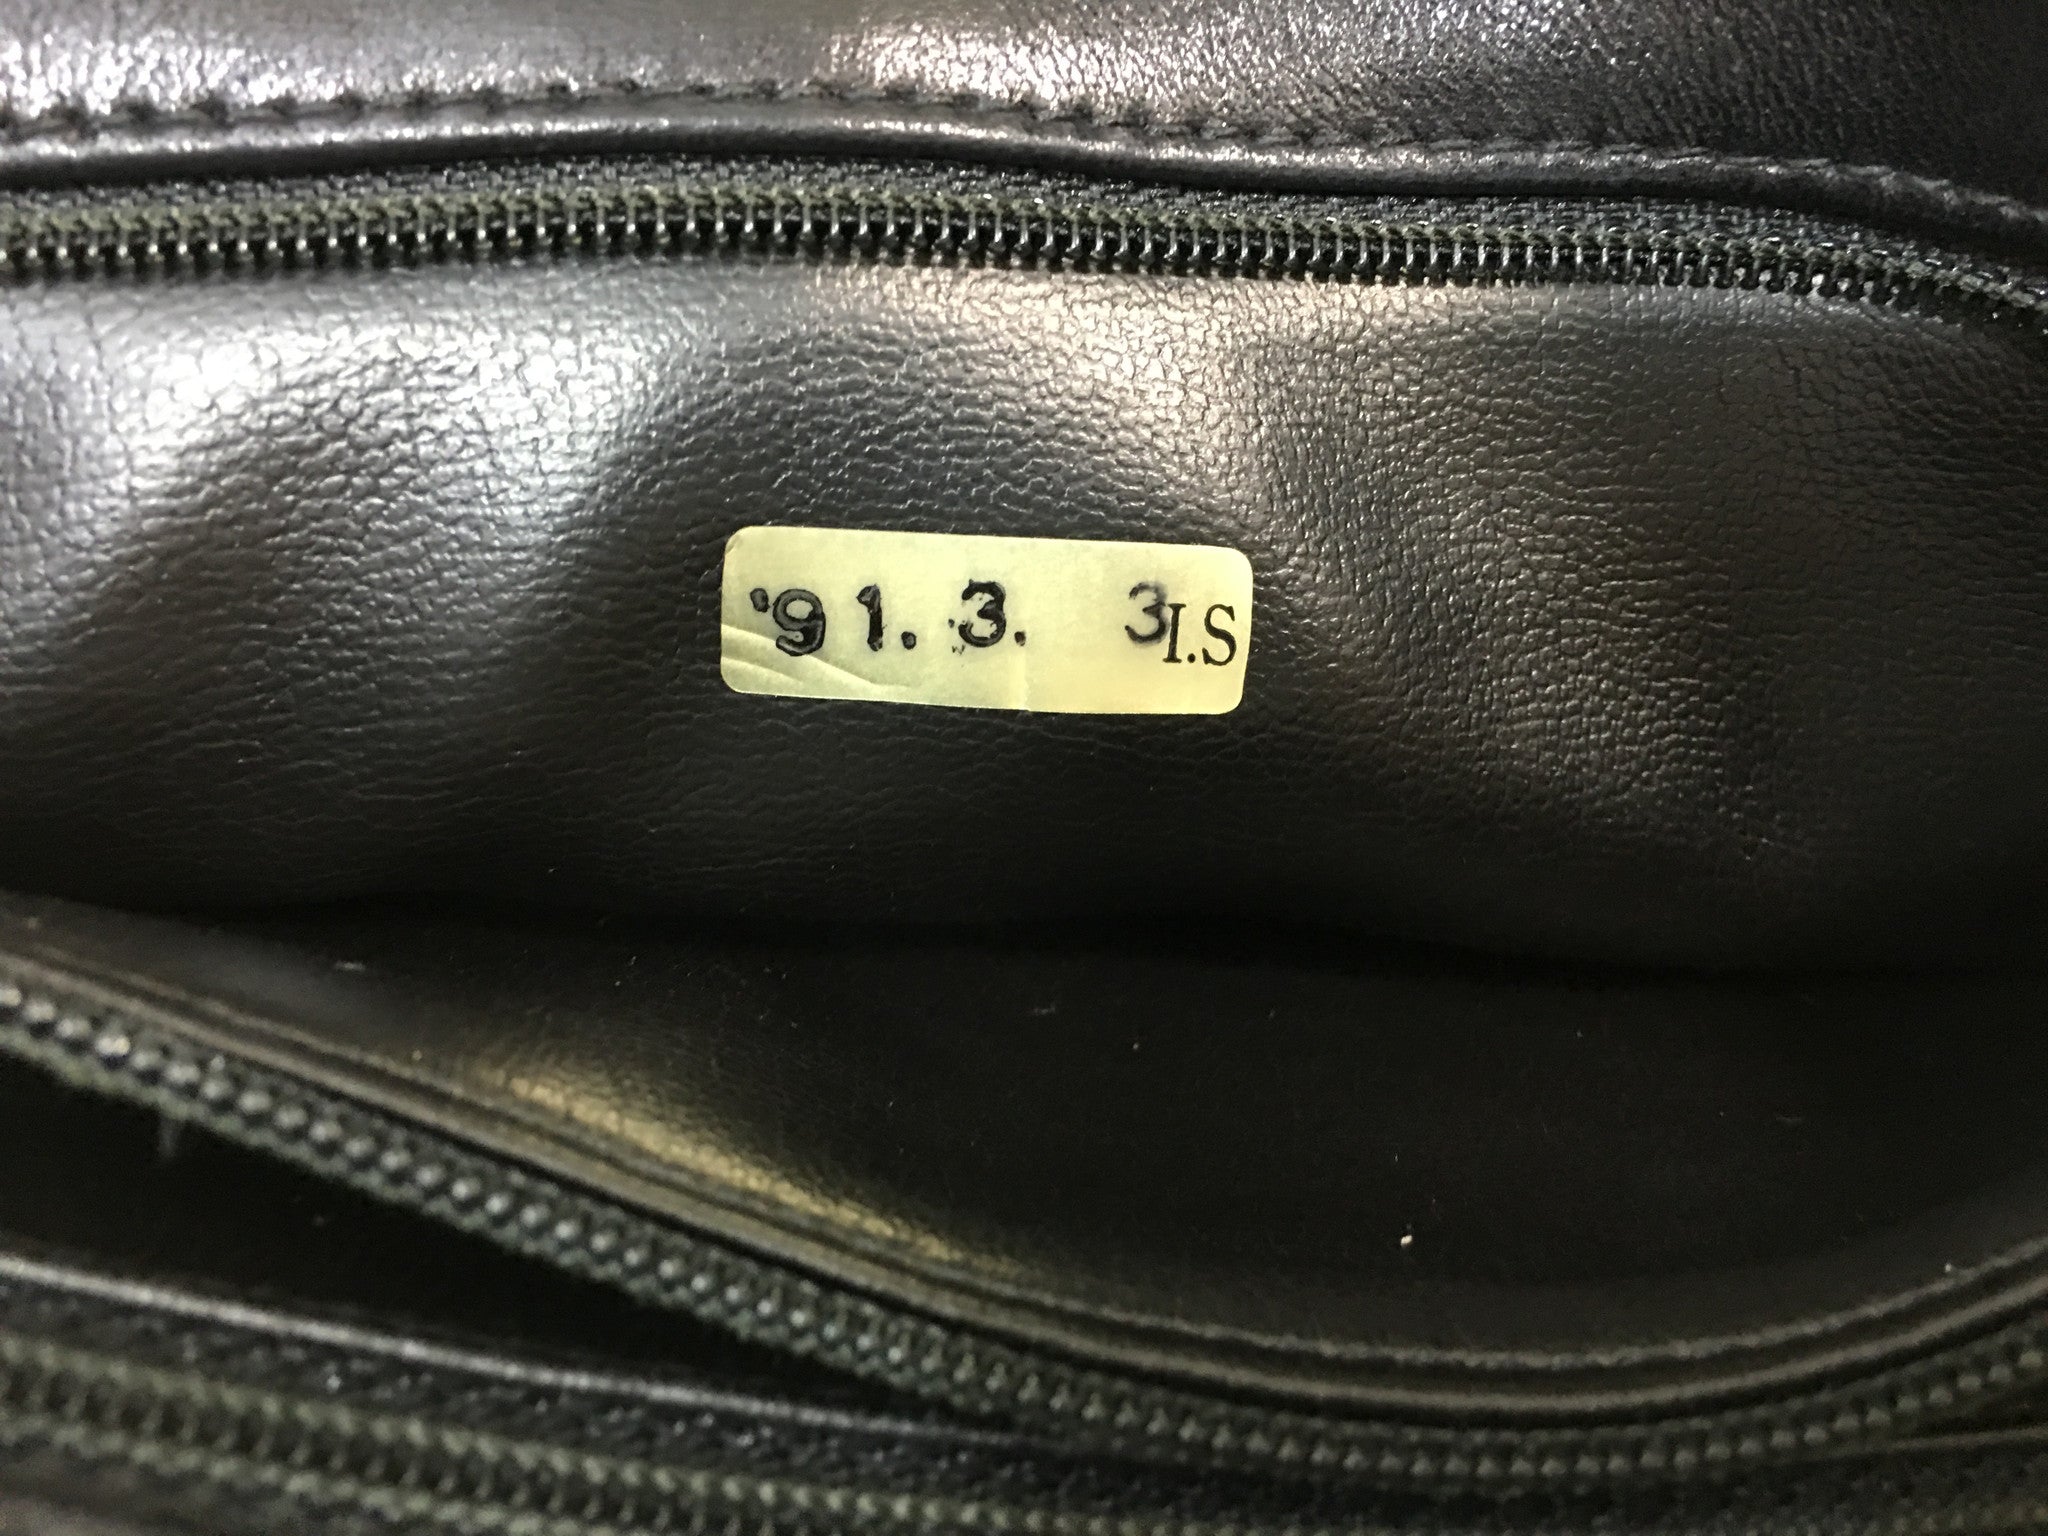 CHANEL Black Lambskin Quilted CC Charm Shoulder Bag